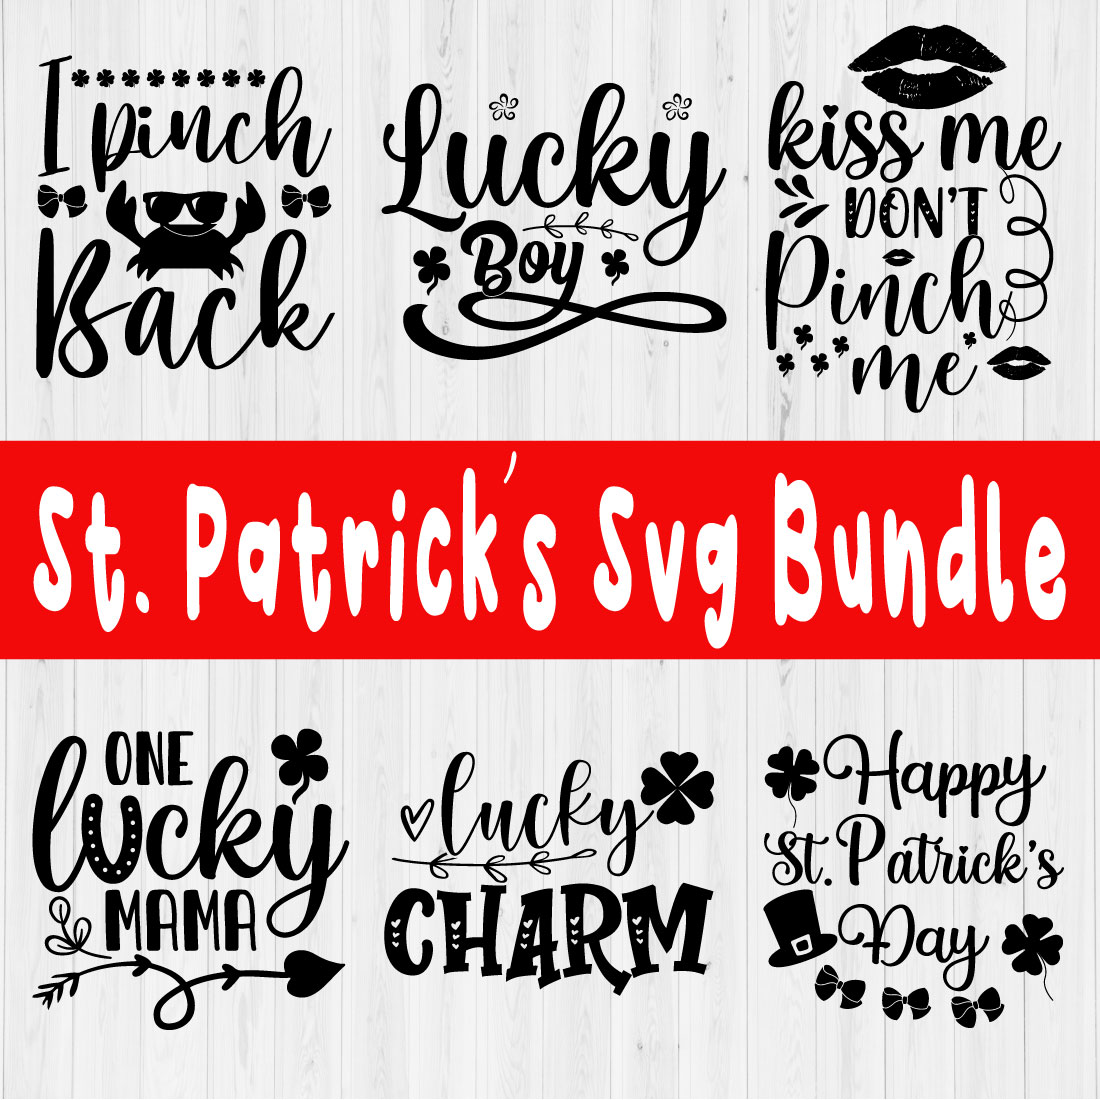 Patrick's Day Svg Design Bundle Vol3 cover image.